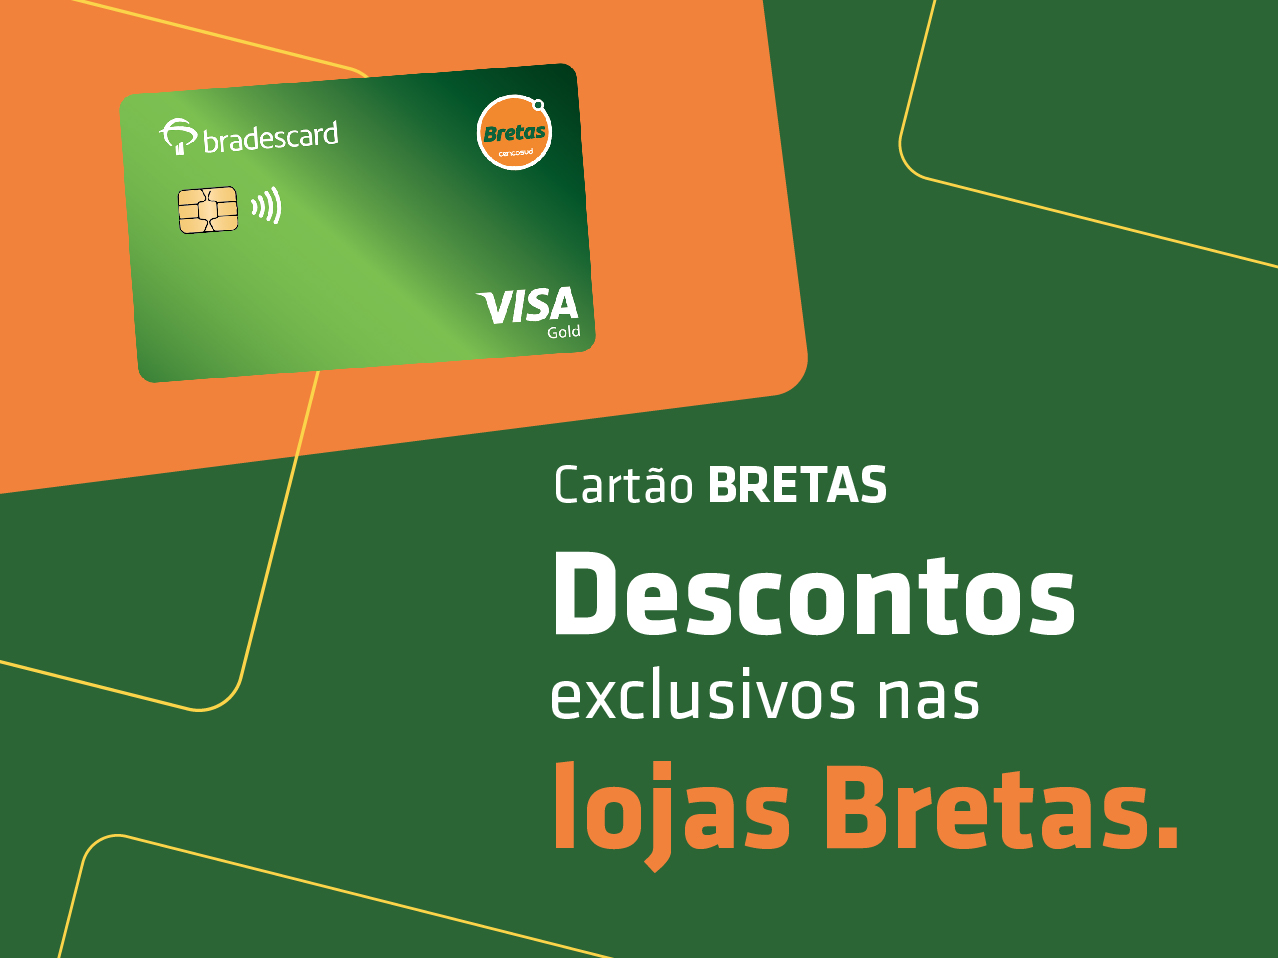 Cencosud Bretas Visa Gold